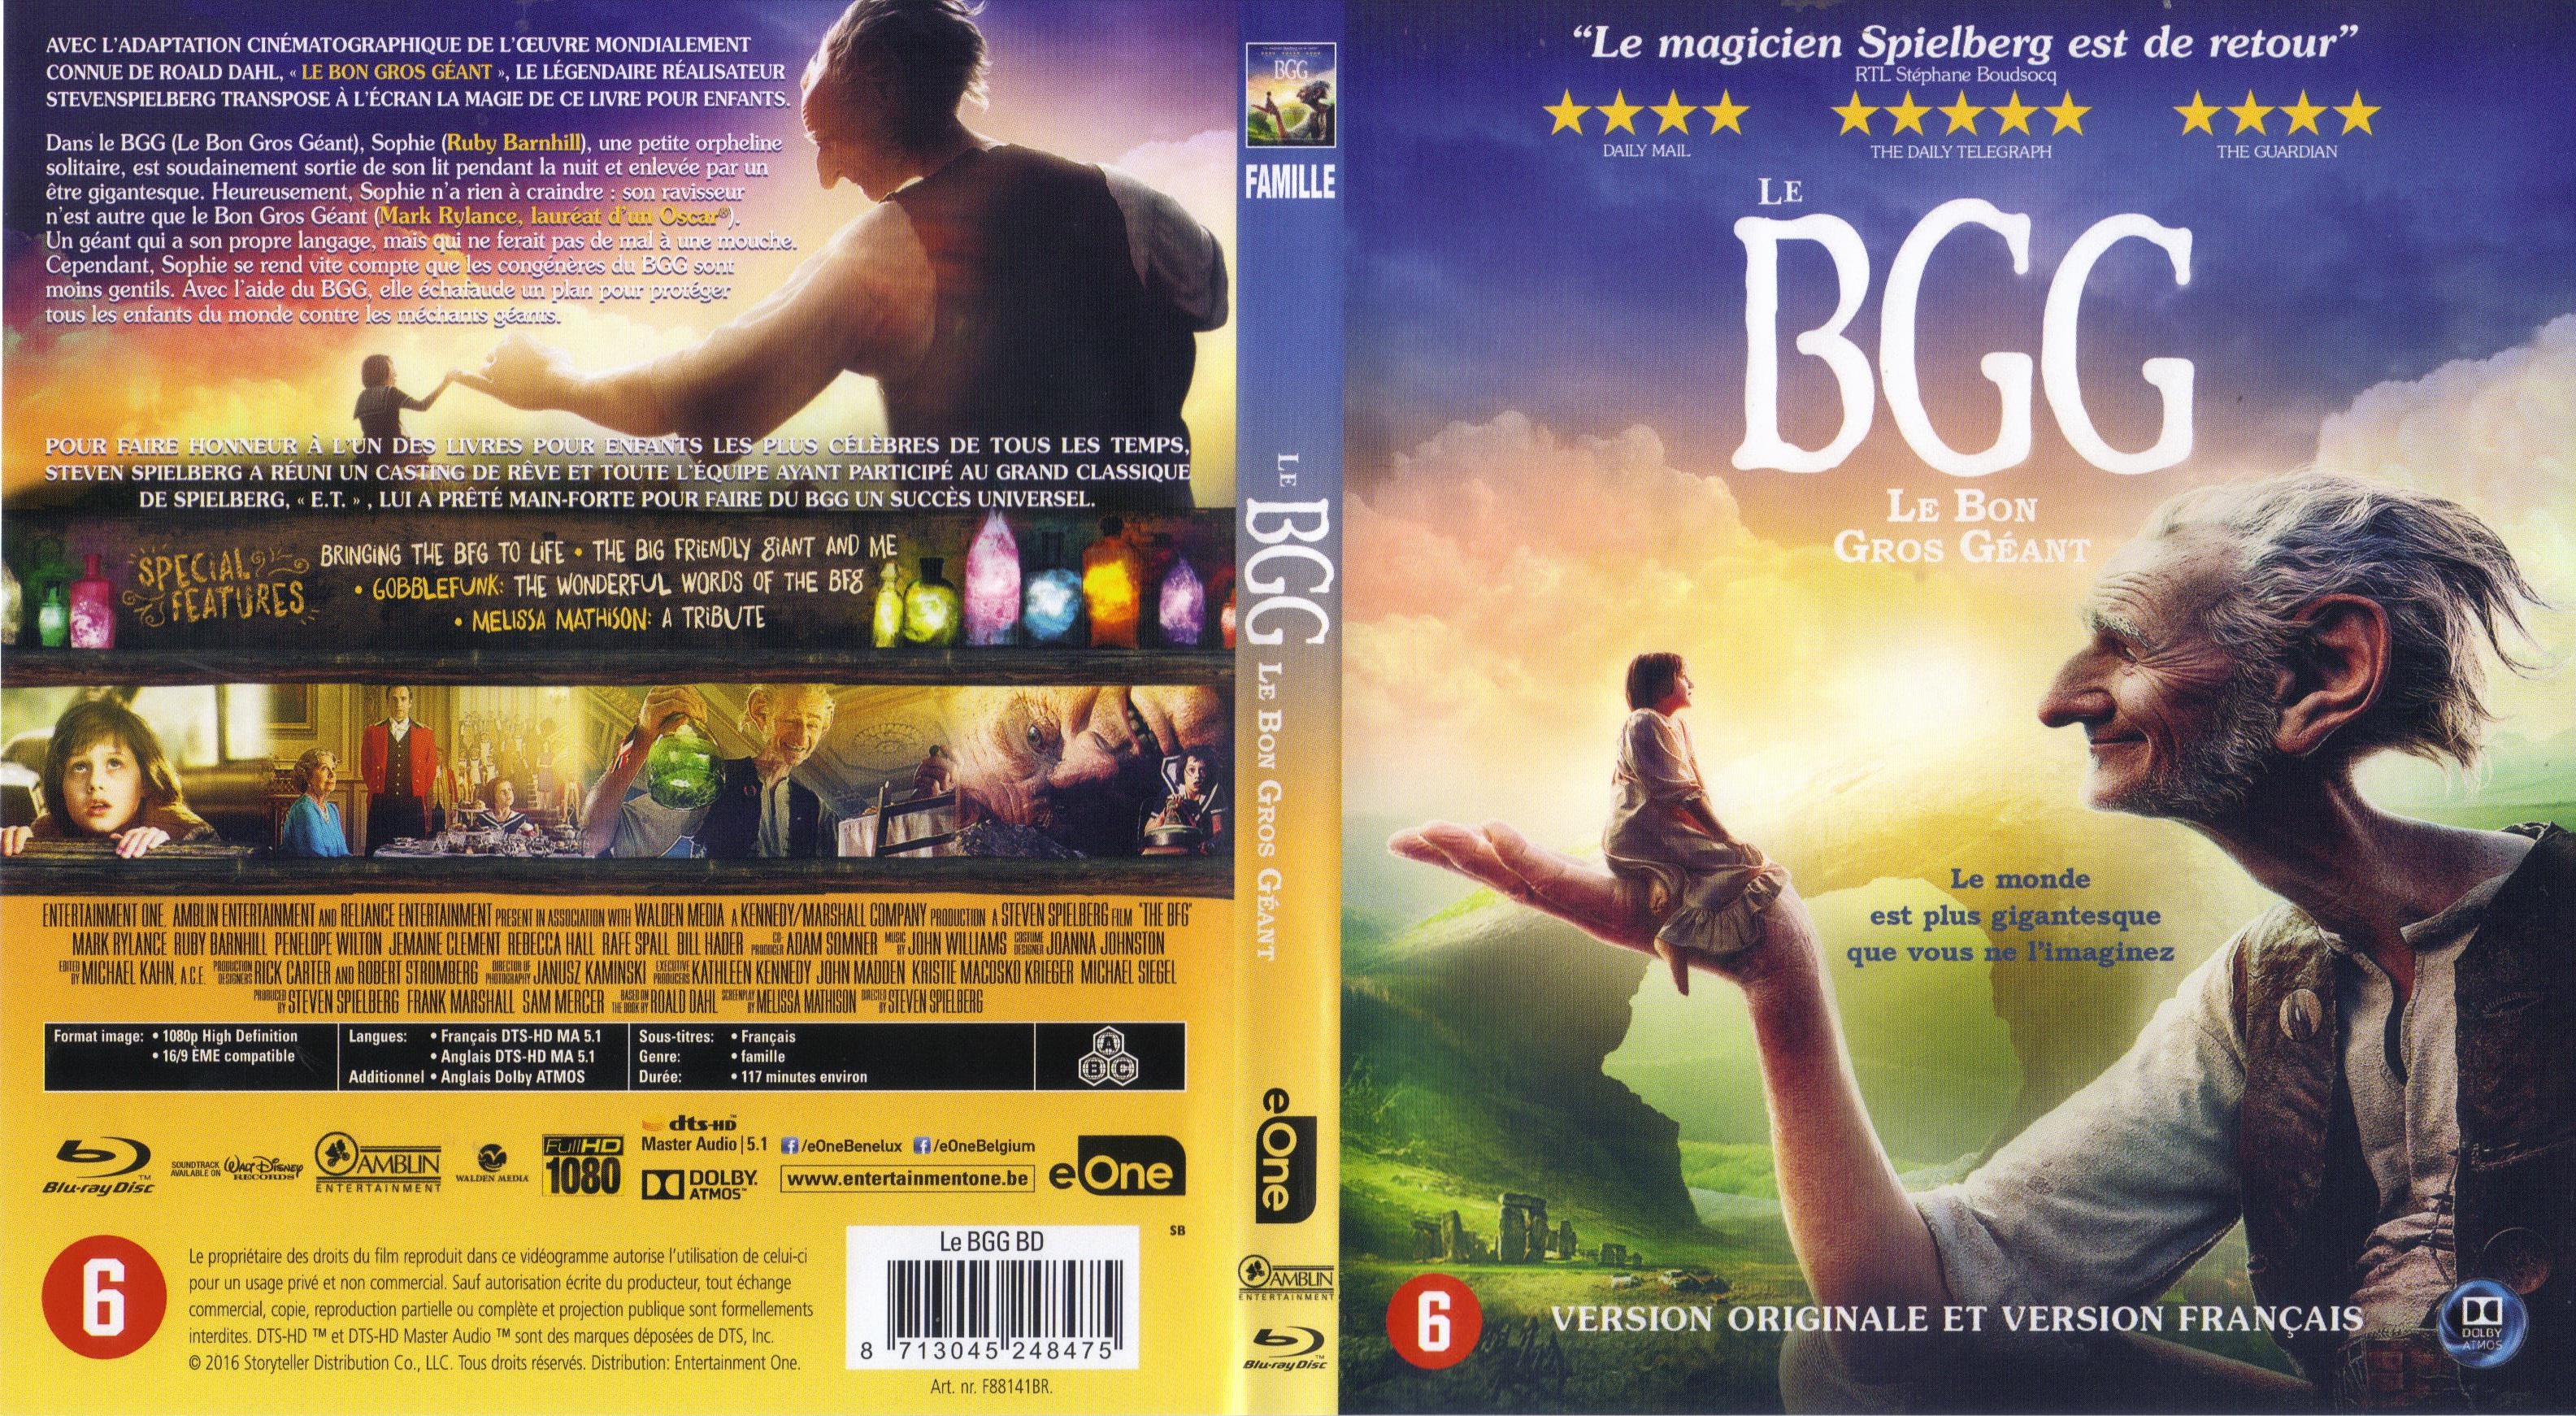 Jaquette DVD Le BGG le bon gros gant (BLU-RAY)